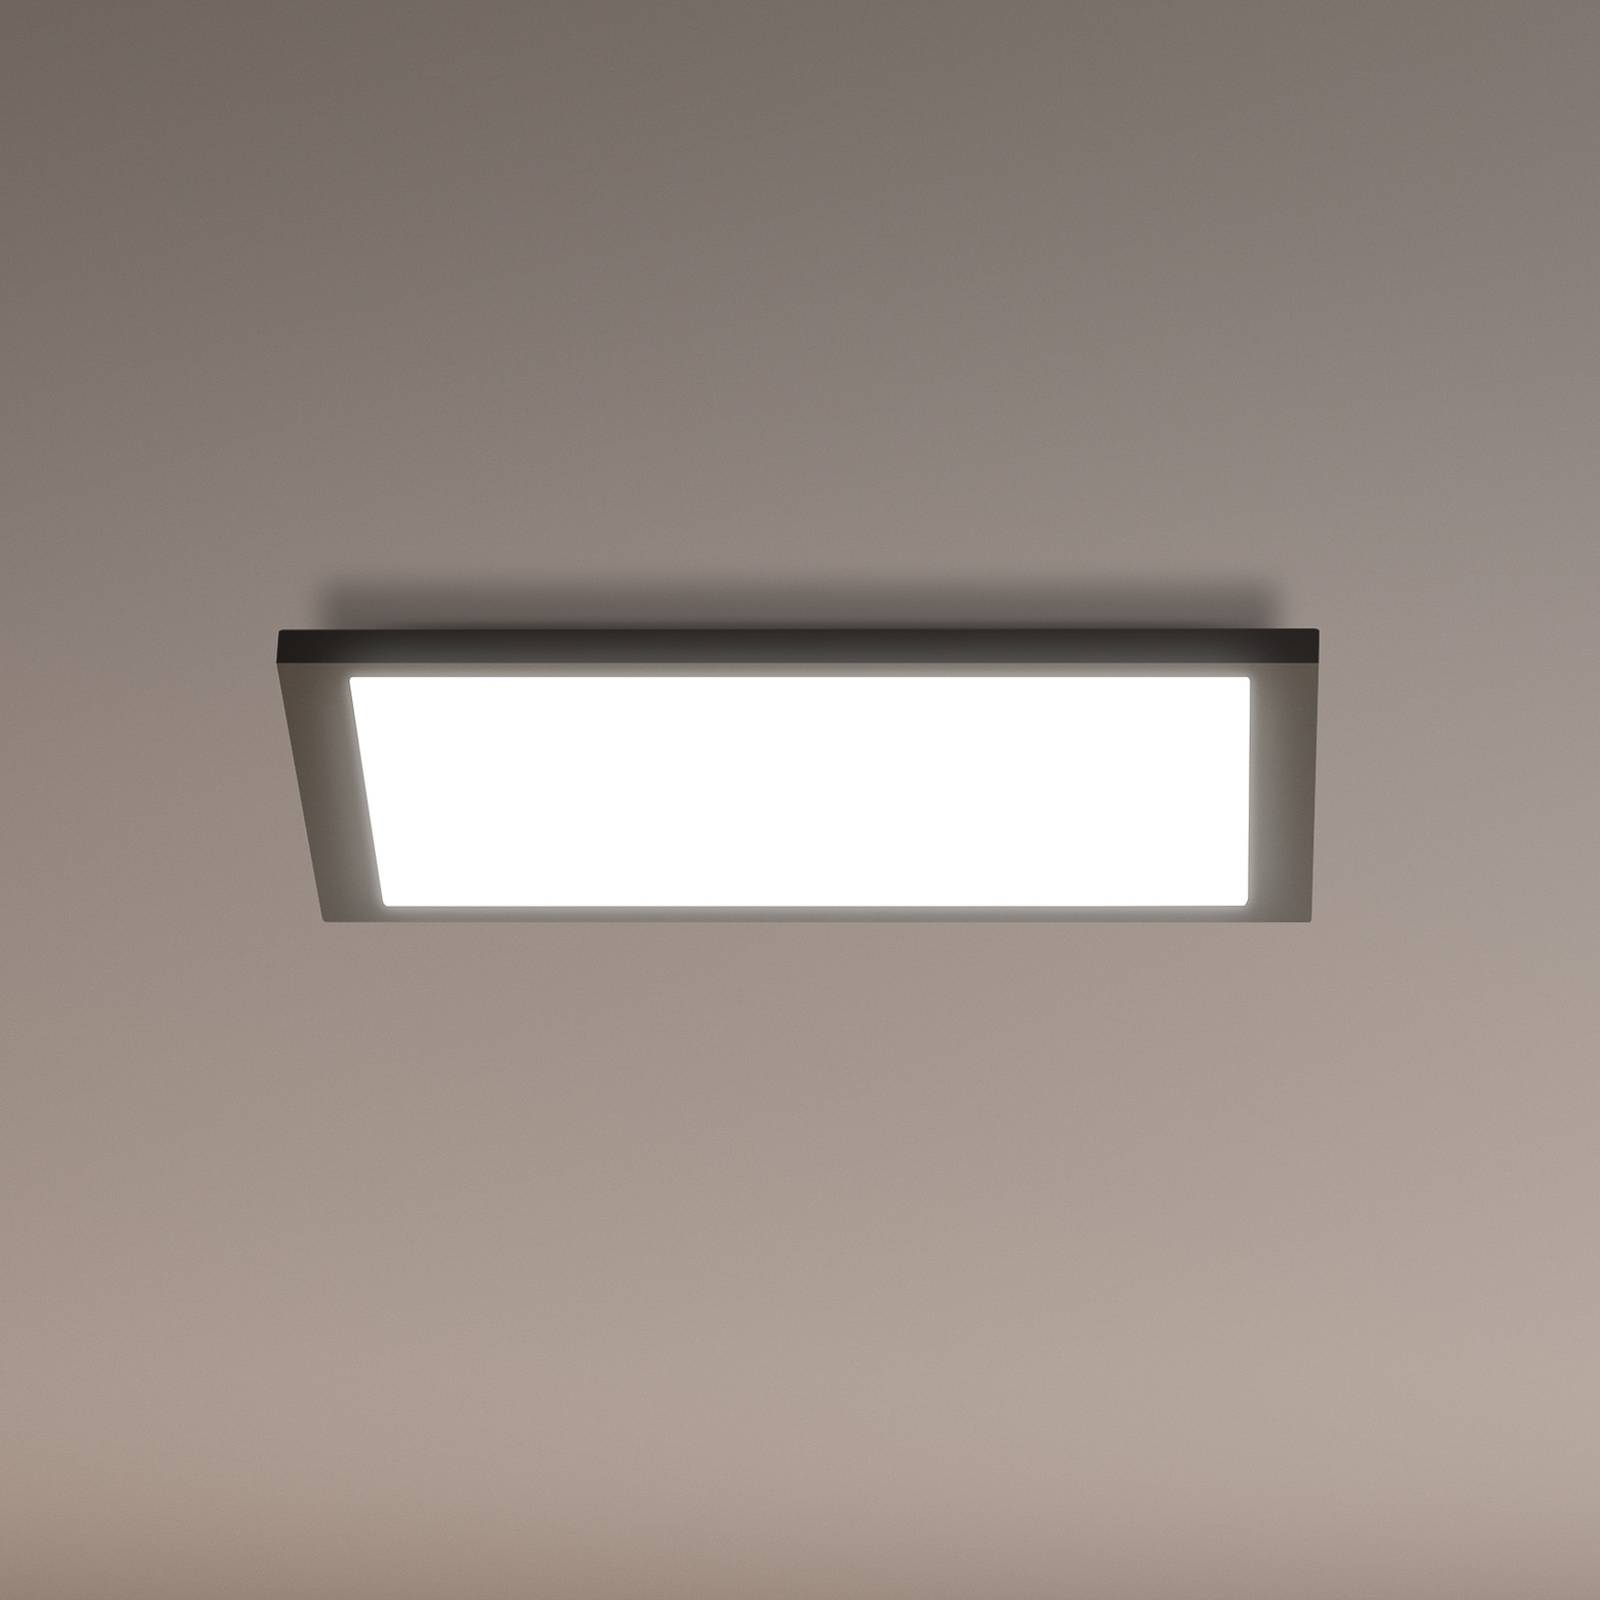 WiZ LED mennyezeti lámpapanel, fekete, 30x30 cm, 30x30 cm